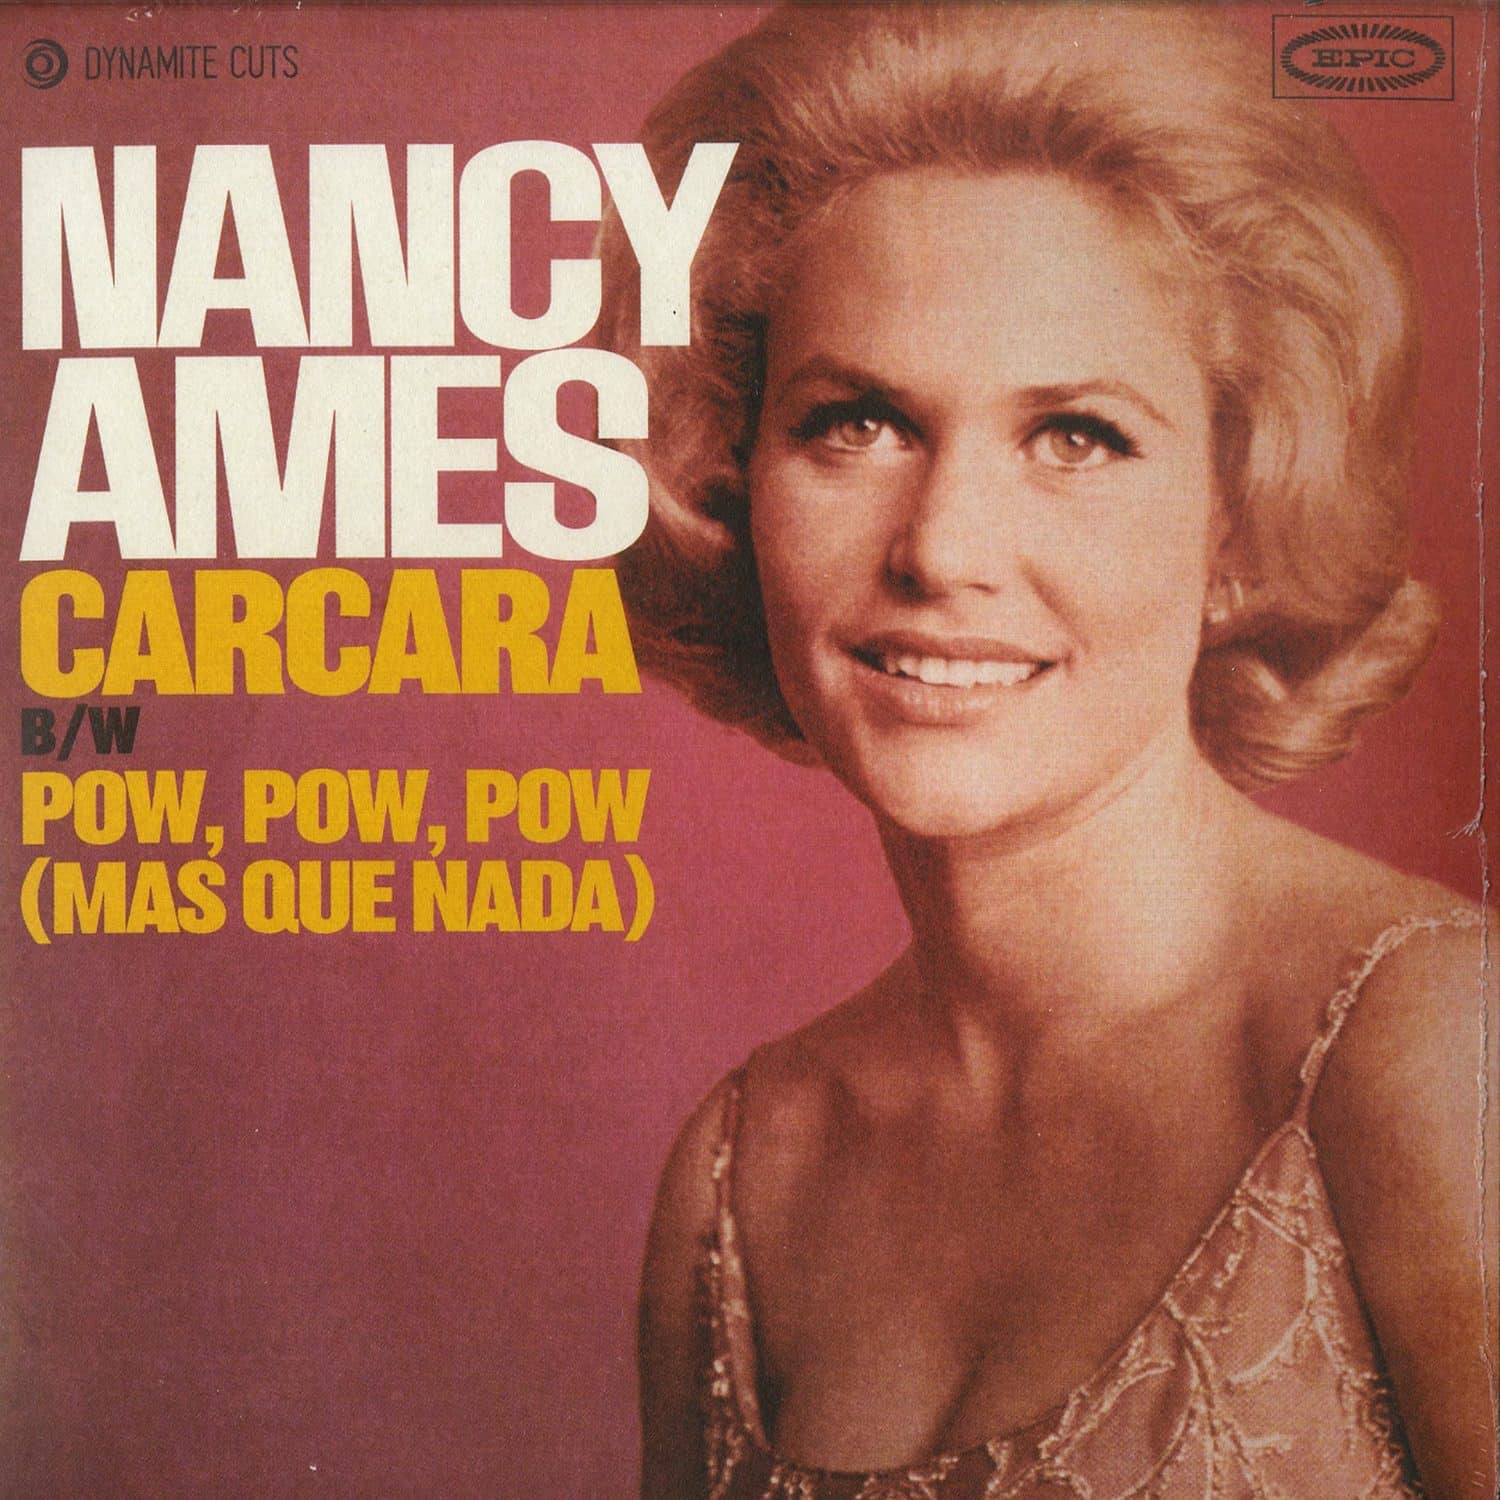 Nancy Ames - CARCARA / POW, POW, POW 